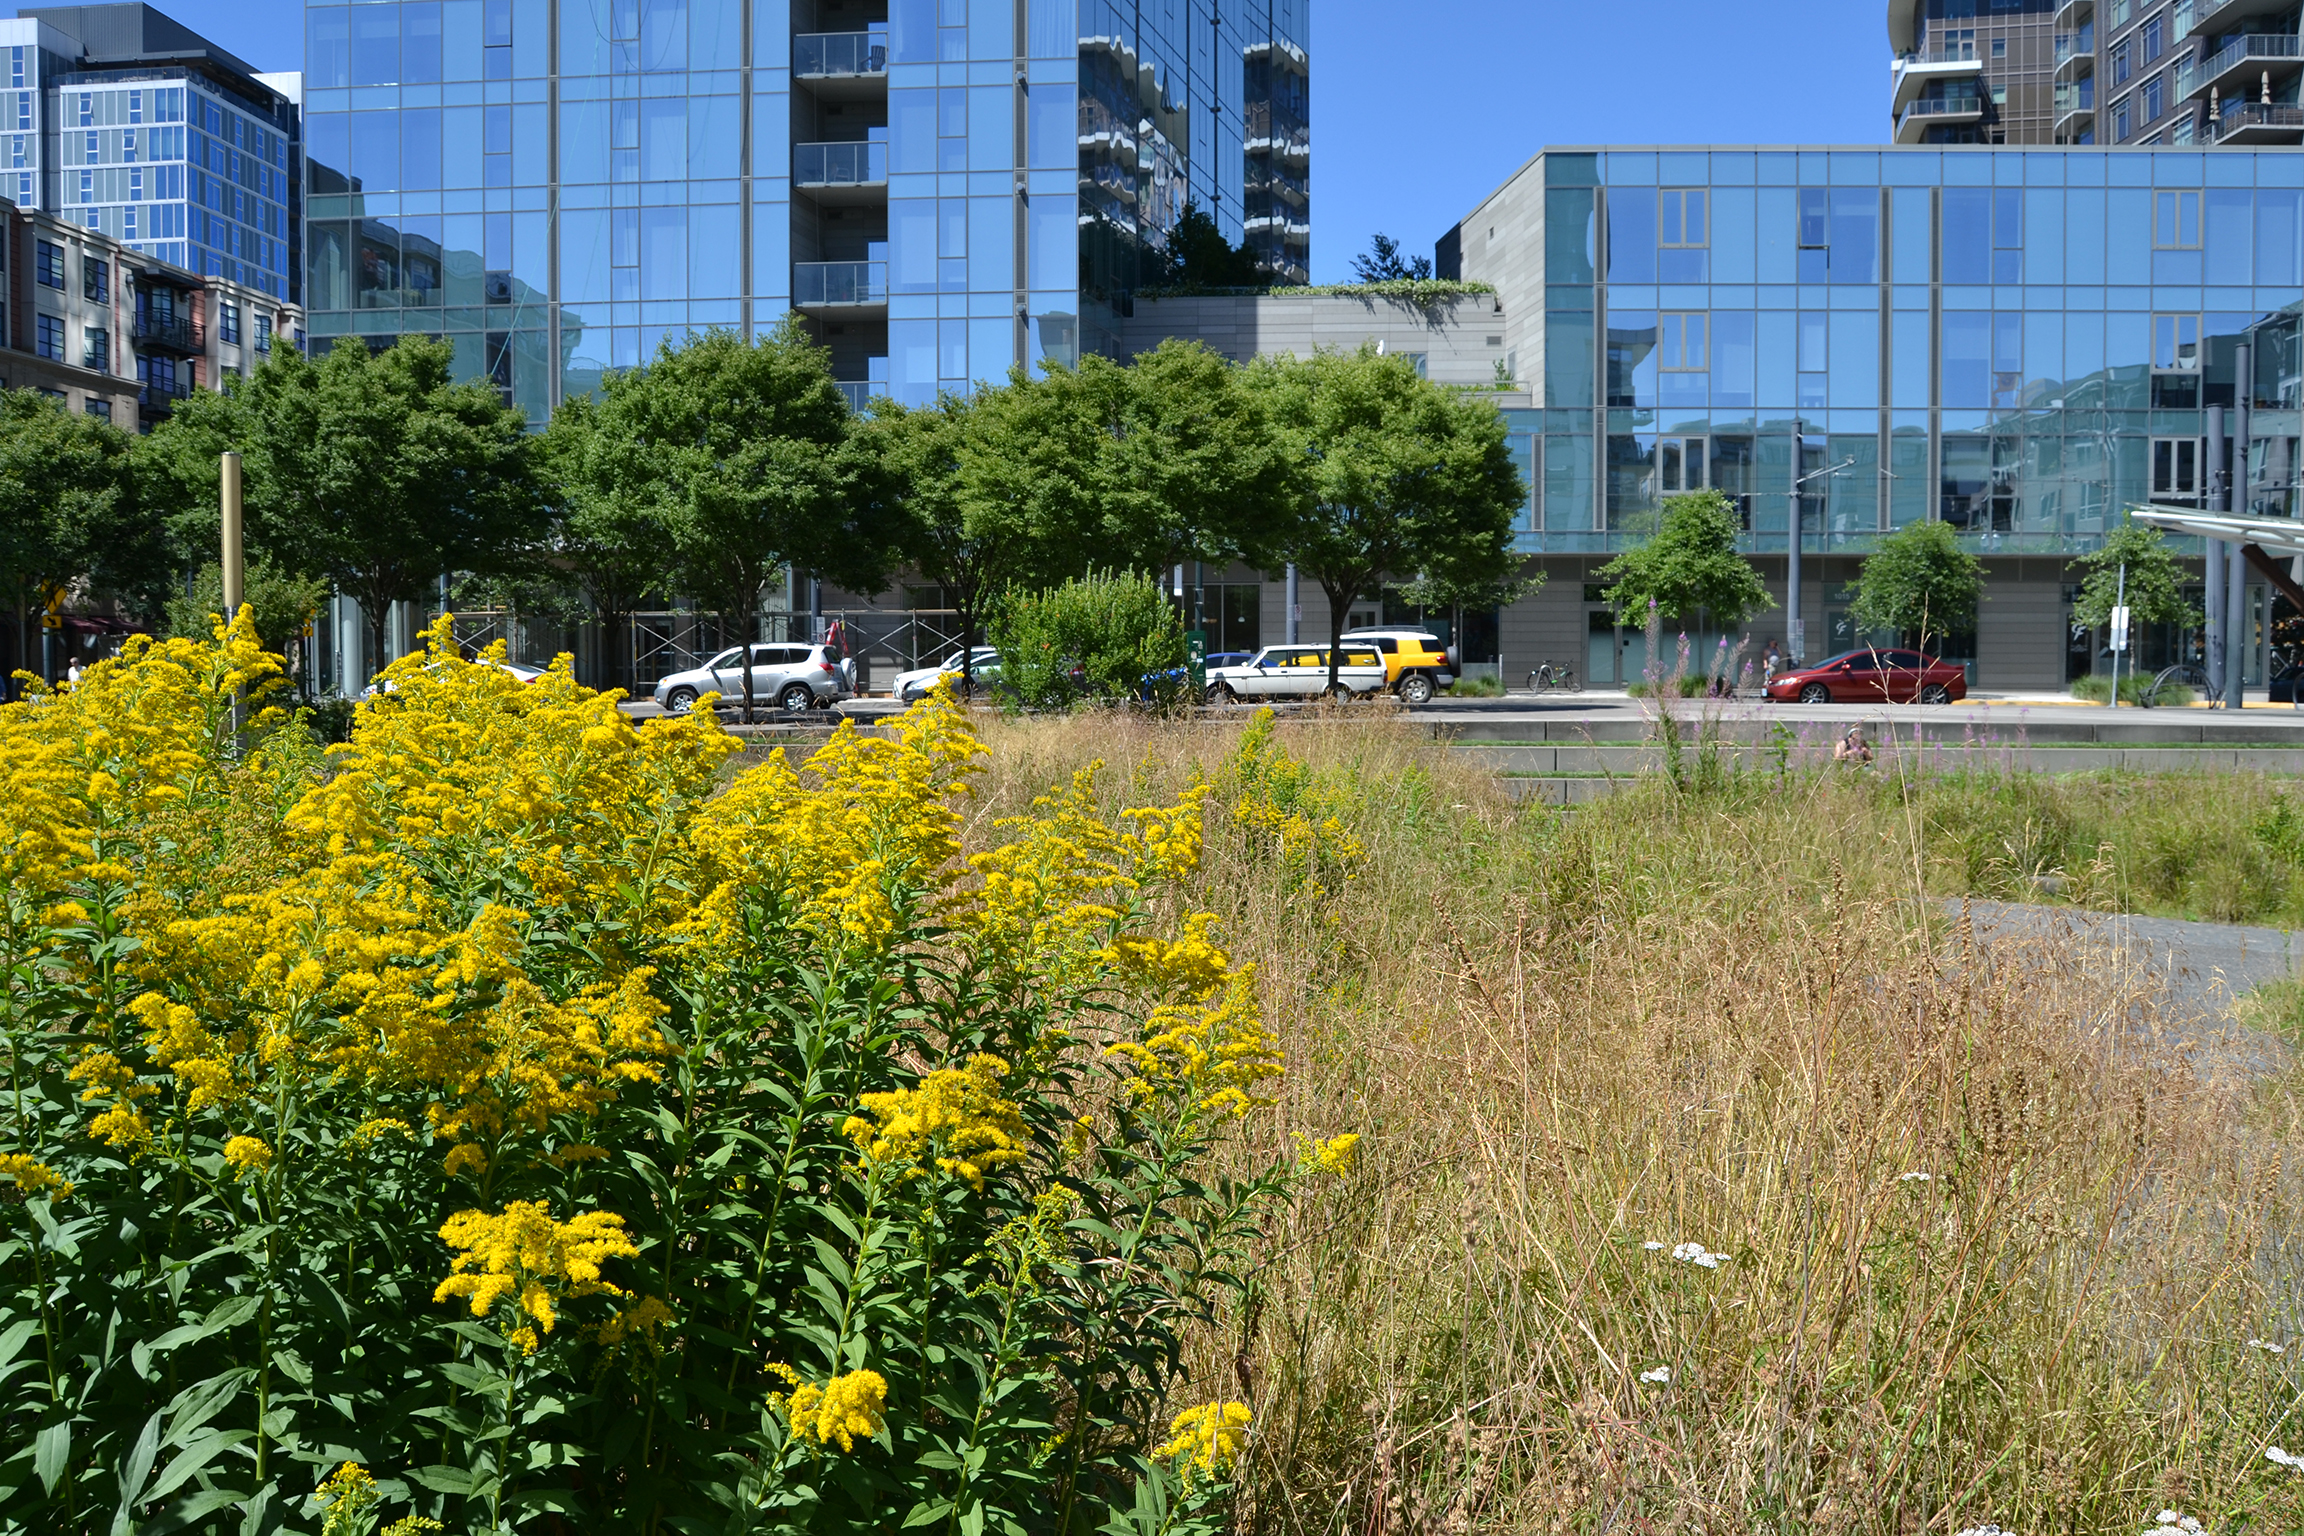 Native wildflowers bloom among office buildings